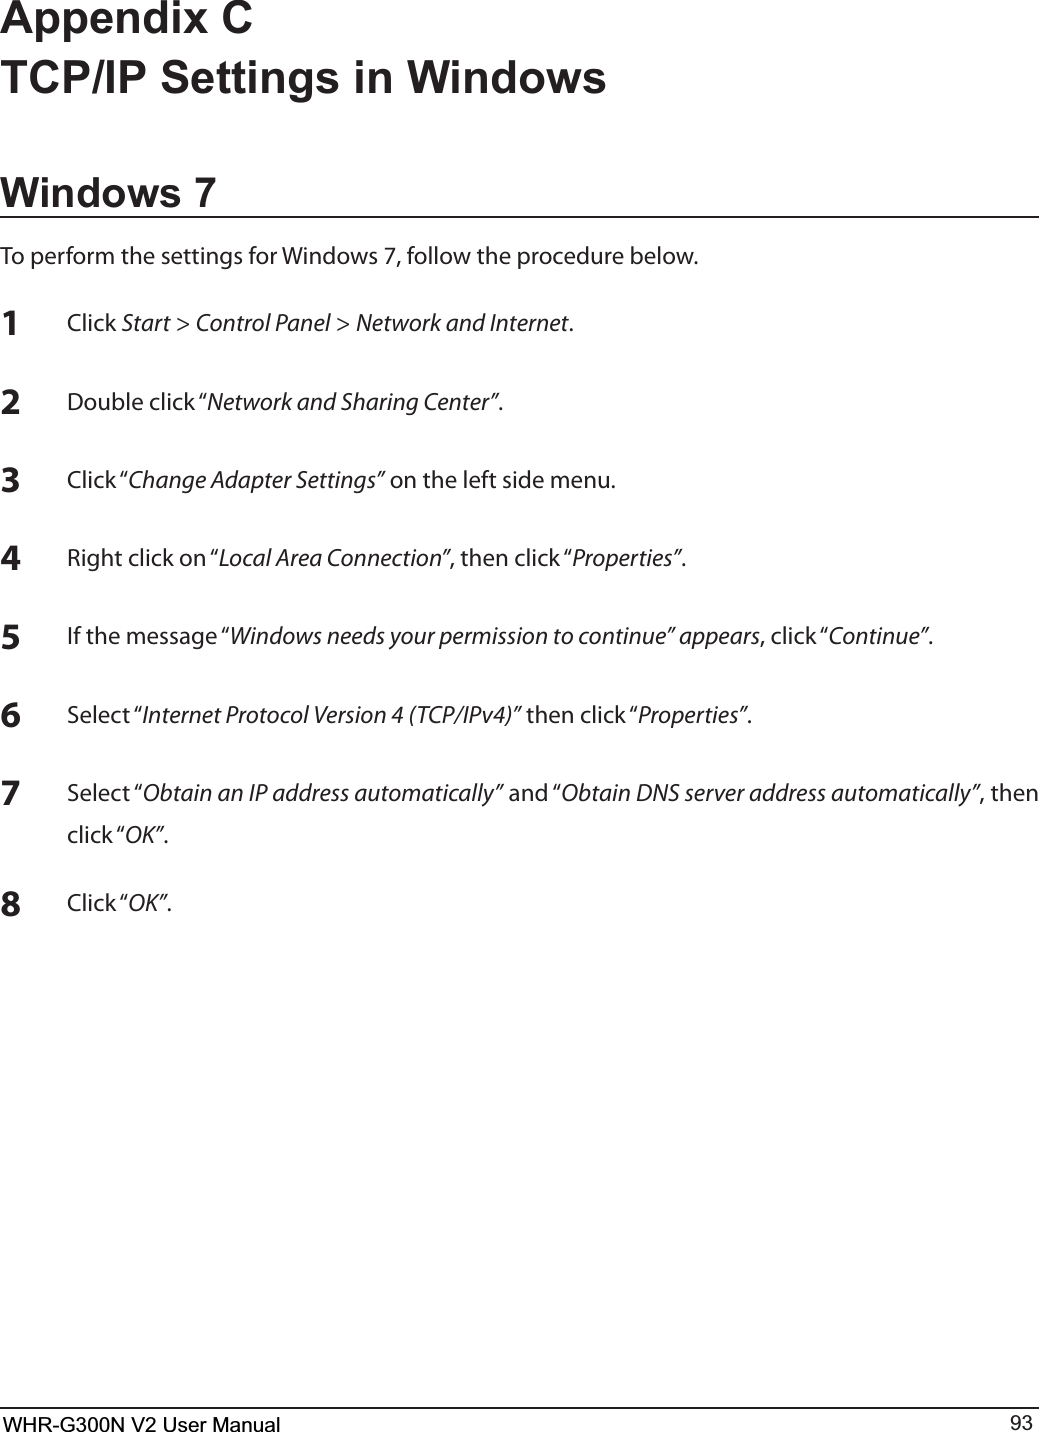 WHR-G300N User Manual 93Appendix C TCP/IP Settings in WindowsWindows 75PQFSGPSNUIFTFUUJOHTGPS8JOEPXTGPMMPXUIFQSPDFEVSFCFMPX1$MJDLStart &gt; Control Panel &gt; Network and Internet.2%PVCMFDMJDLiNetwork and Sharing Center”.3$MJDLiChange Adapter Settings” on the left side menu.43JHIUDMJDLPOiLocal Area Connection”UIFODMJDLiProperties”.5*GUIFNFTTBHFiWindows needs your permission to continue” appearsDMJDLiContinue”.64FMFDUiInternet Protocol Version 4 (TCP/IPv4)”UIFODMJDLiProperties”.74FMFDUiObtain an IP address automatically”BOEiObtain DNS server address automatically”, then DMJDLiOK”.8$MJDLiOK”.WHR-G300N V2 User Manual